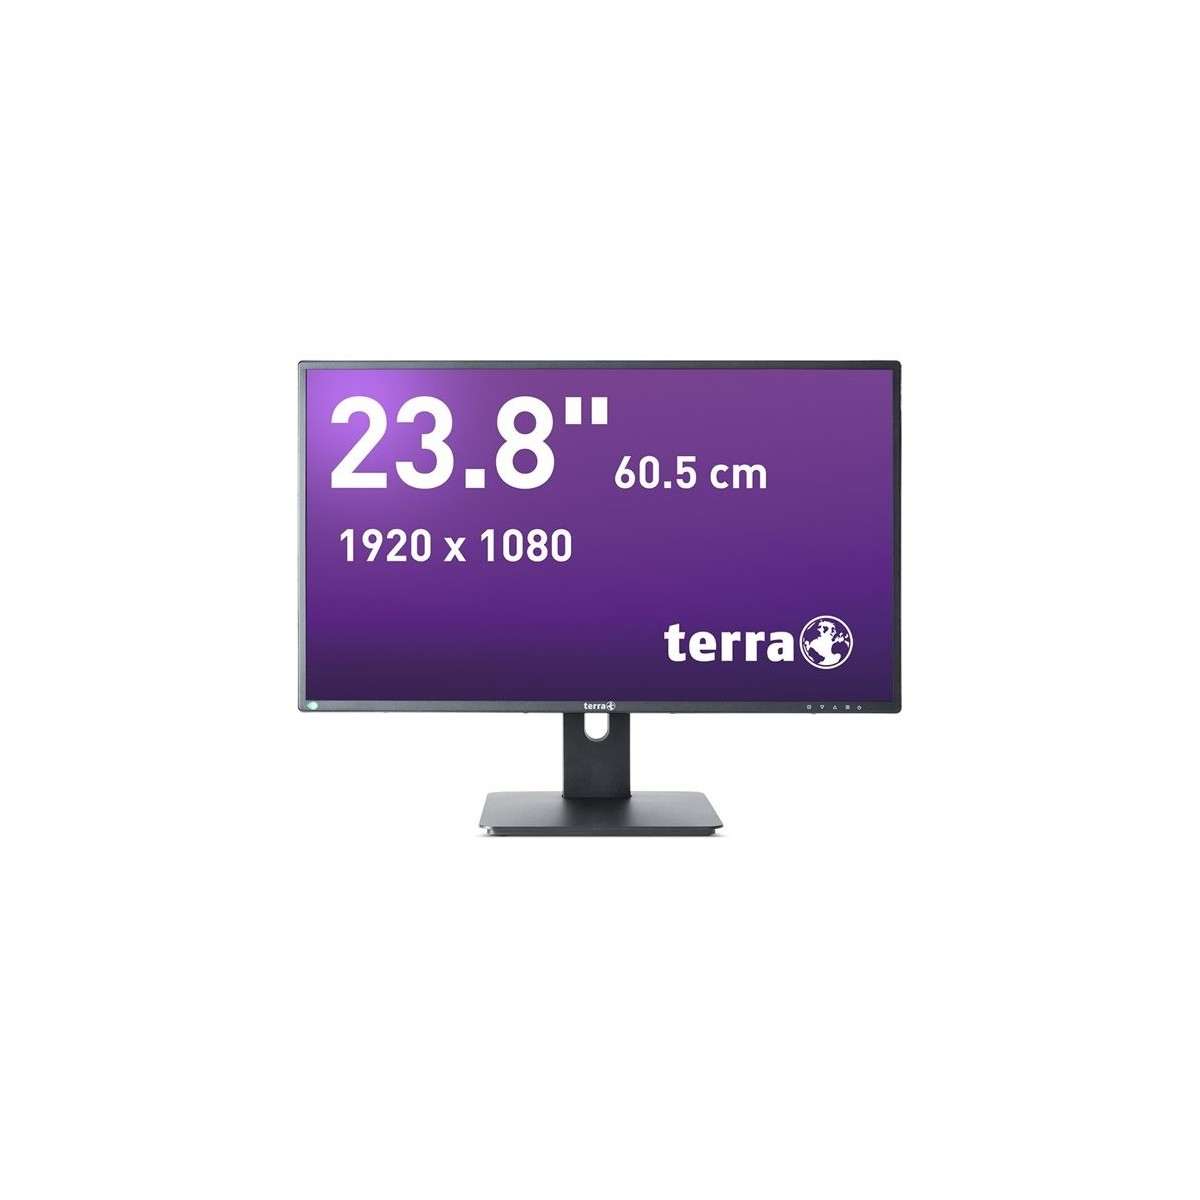 TERRA LCD-LED 2456W PV V3 schwarz DP, HDMI GREENLINE PLUS - Flat Screen - 60.5 cm